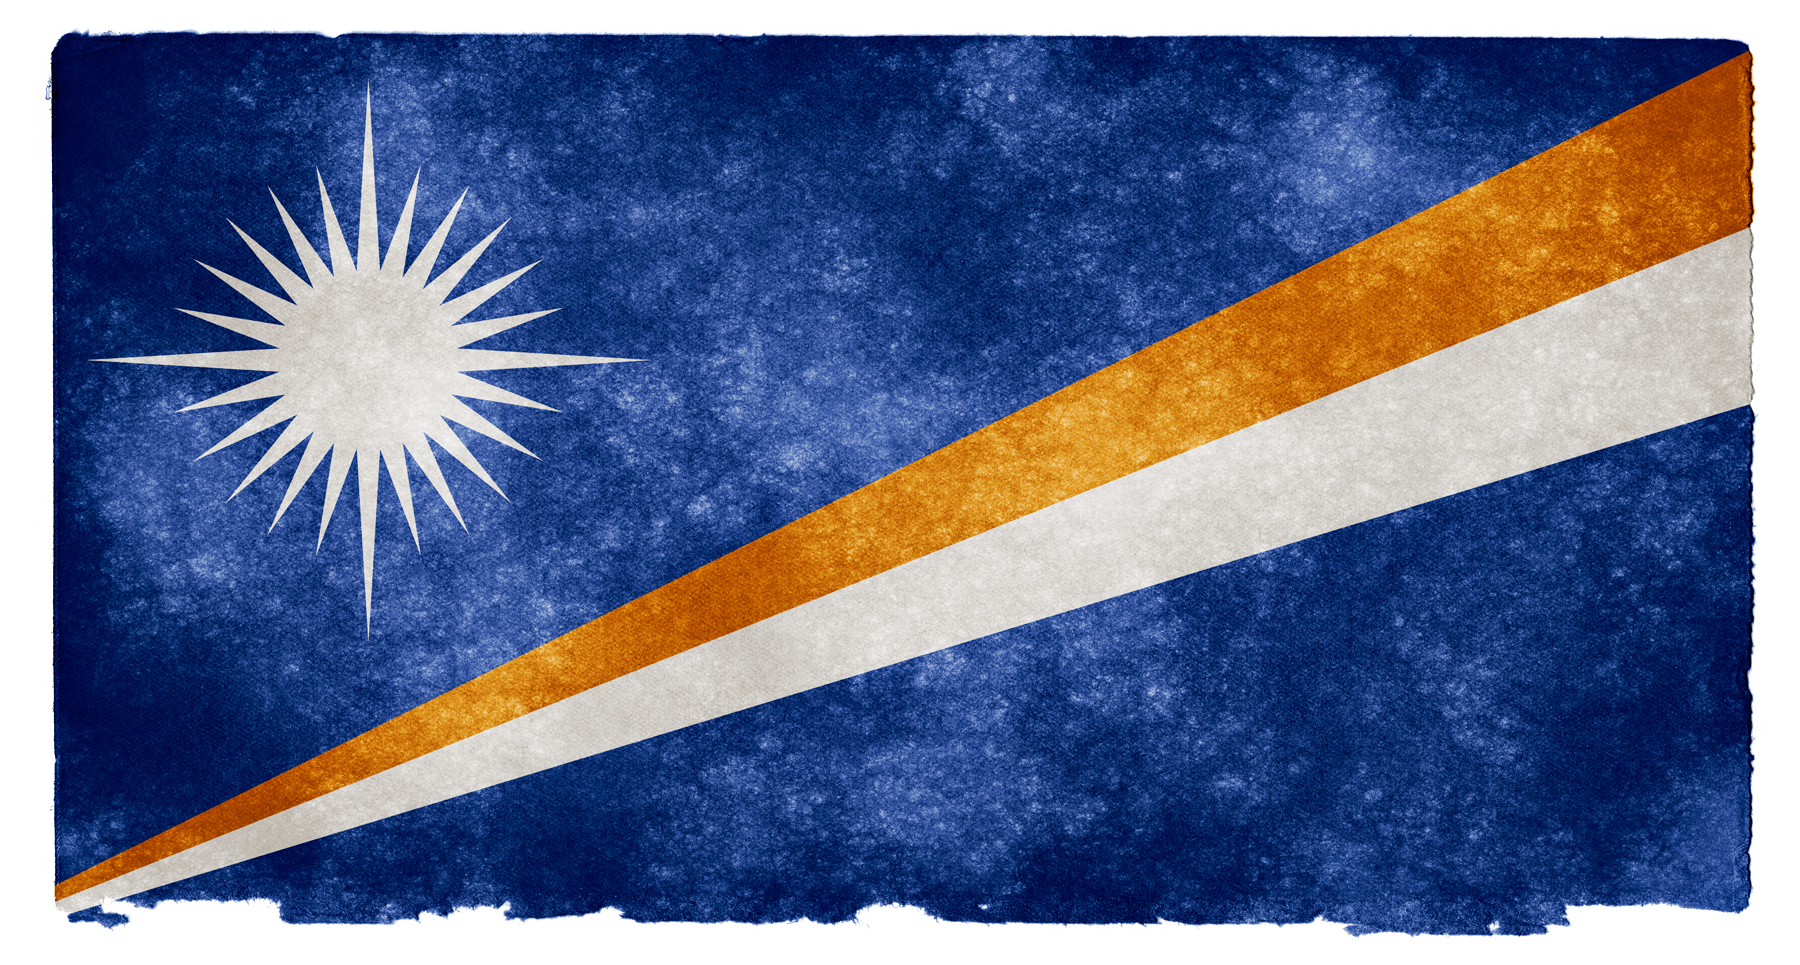 Marshall islands grunge flag photo